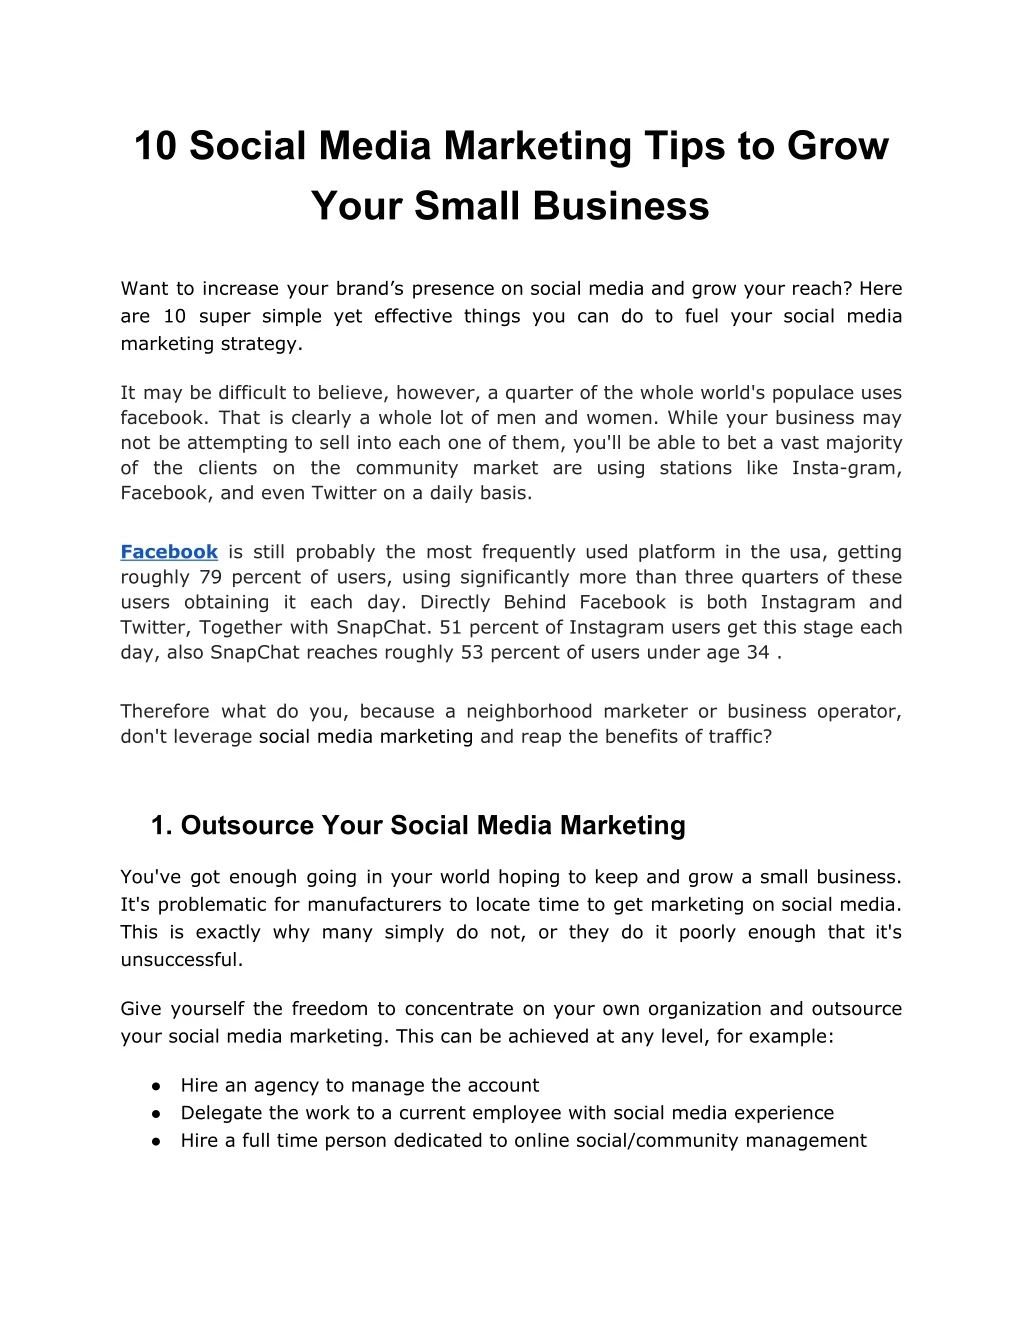 10 social media marketing tips to grow your small